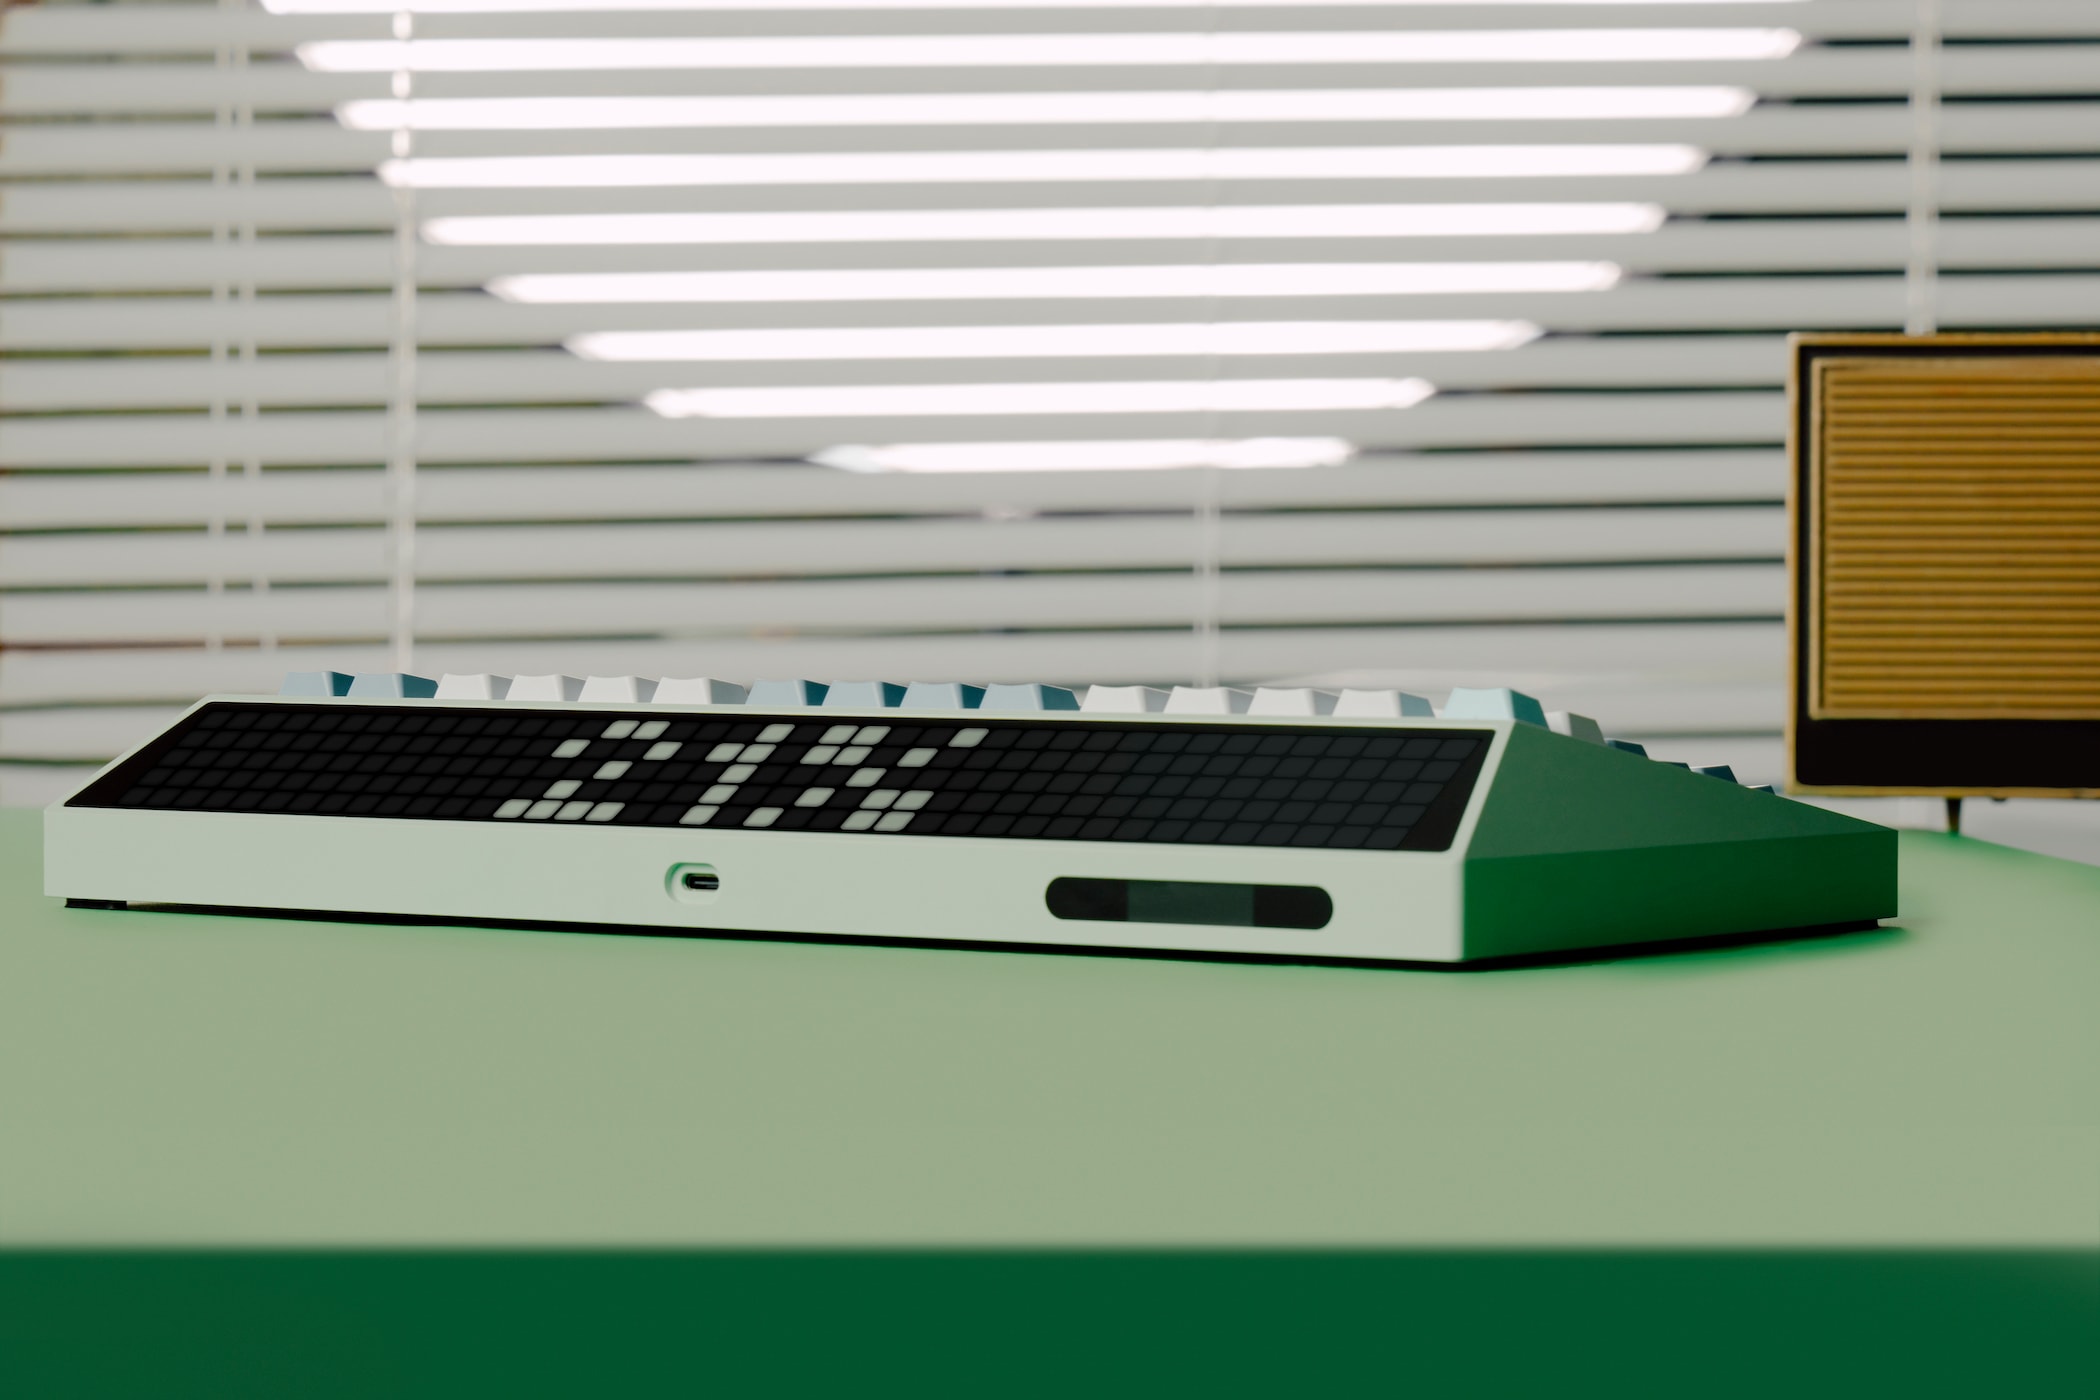 Angry Miao 推出全新 CYBERBOARD R3 鍵盤系列